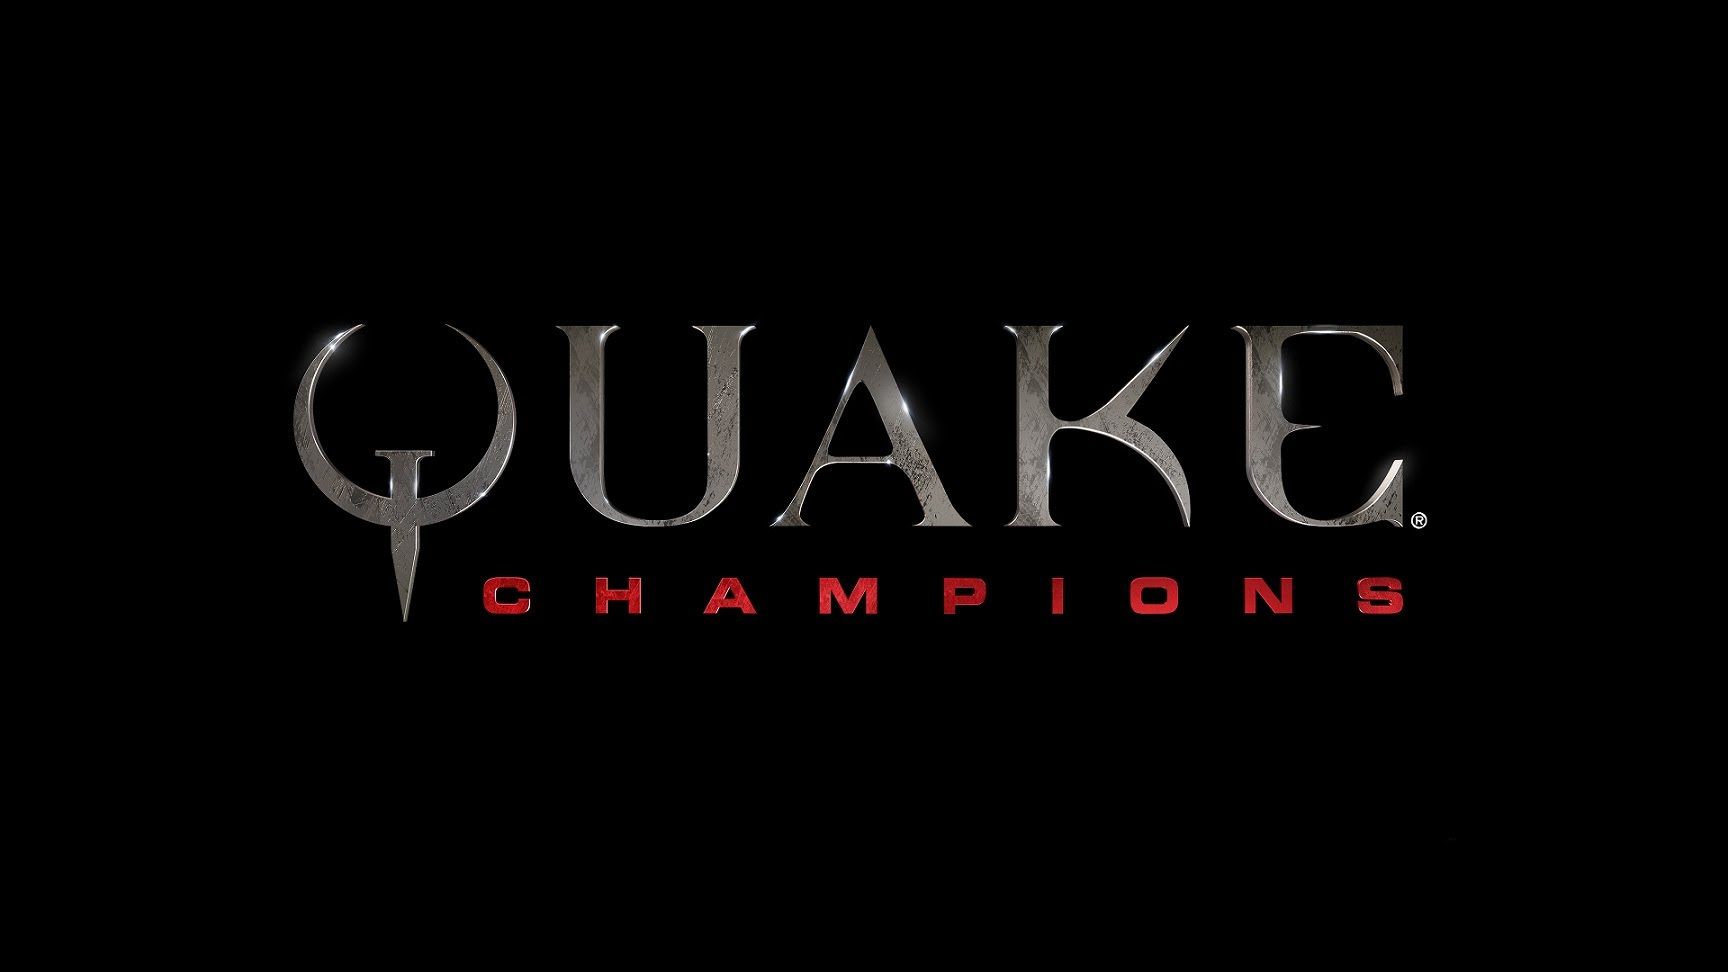 quake champions release date download free